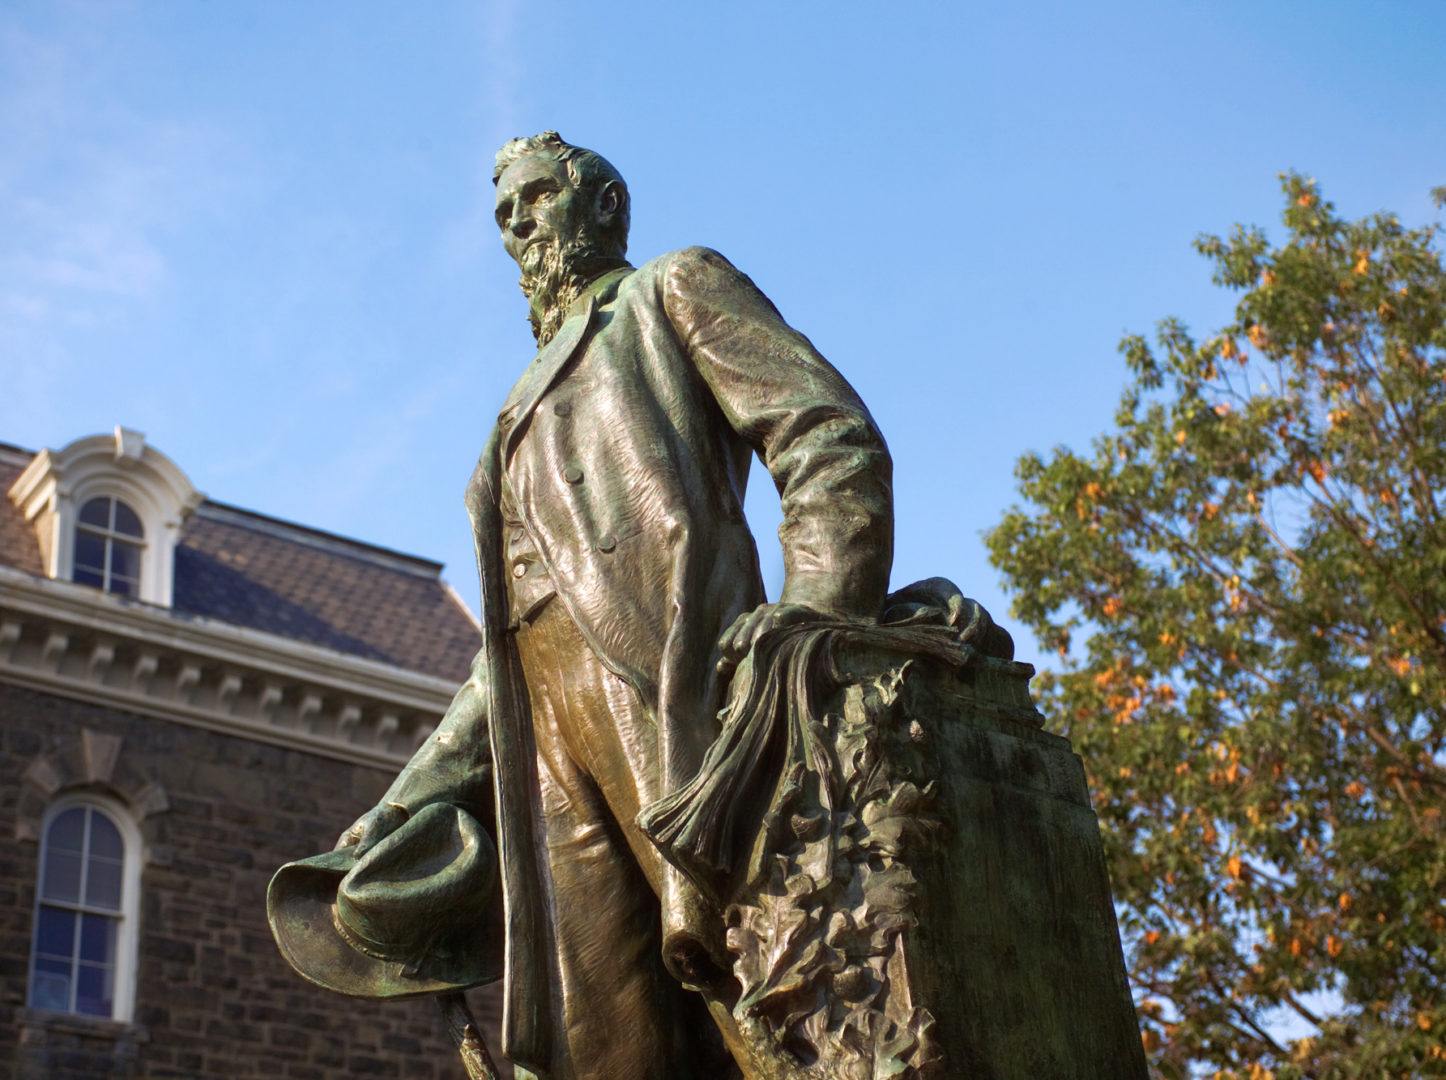 The statue of Ezra Cornell on the Arts Quad.